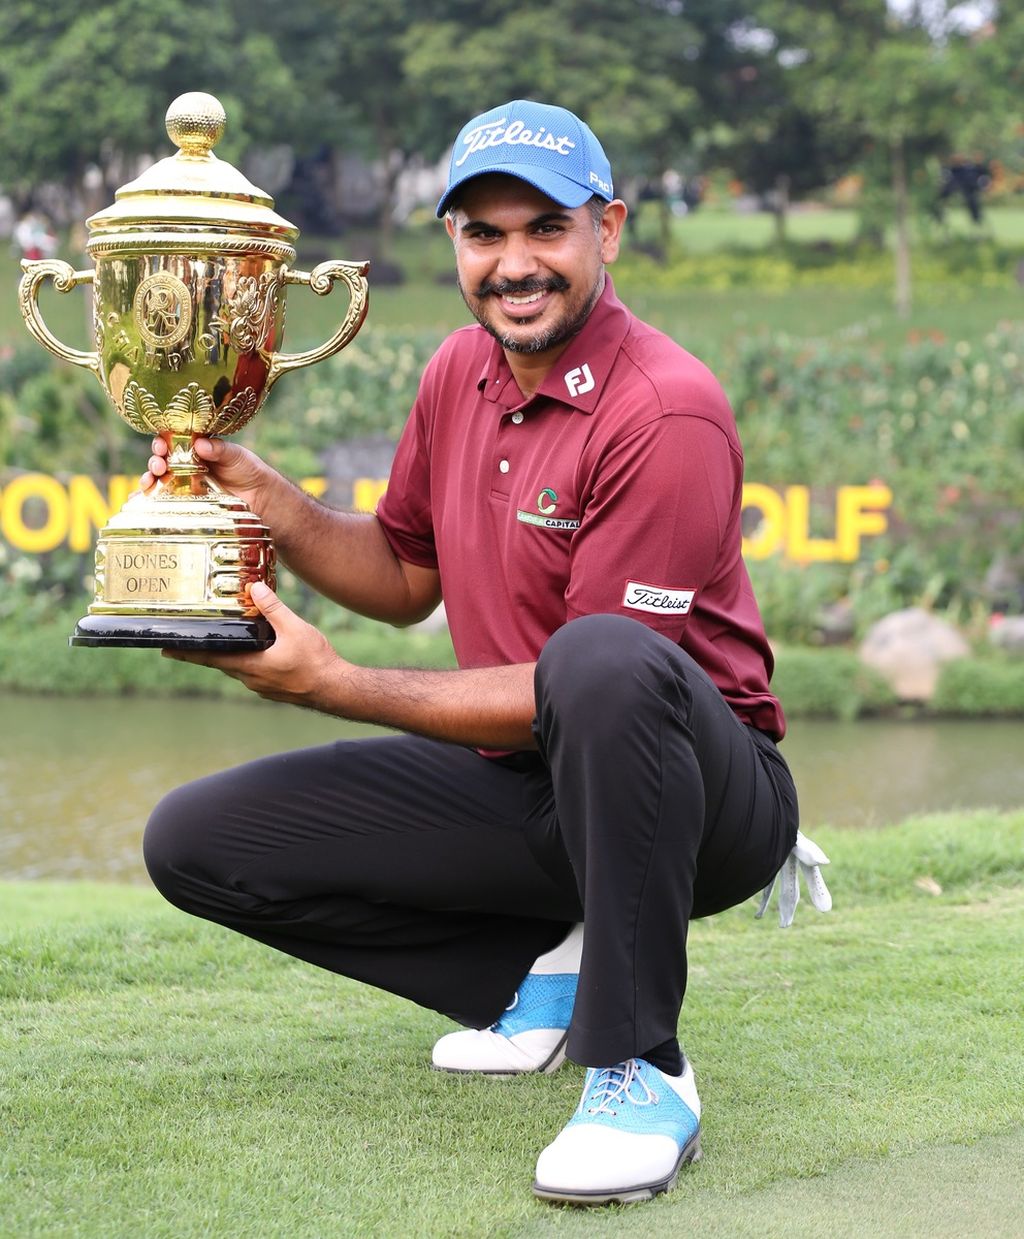 Pegolf India, Gaganjeet Bhullar, memamerkan trofi juara Mandiri Indonesia Open pada Minggu (7/8/2022) di Lapangan Golf Pondok Indah, Jakarta. Sebelumnya, Bhullar menjuarai Indonesia Open pada 2013 dan 2015.